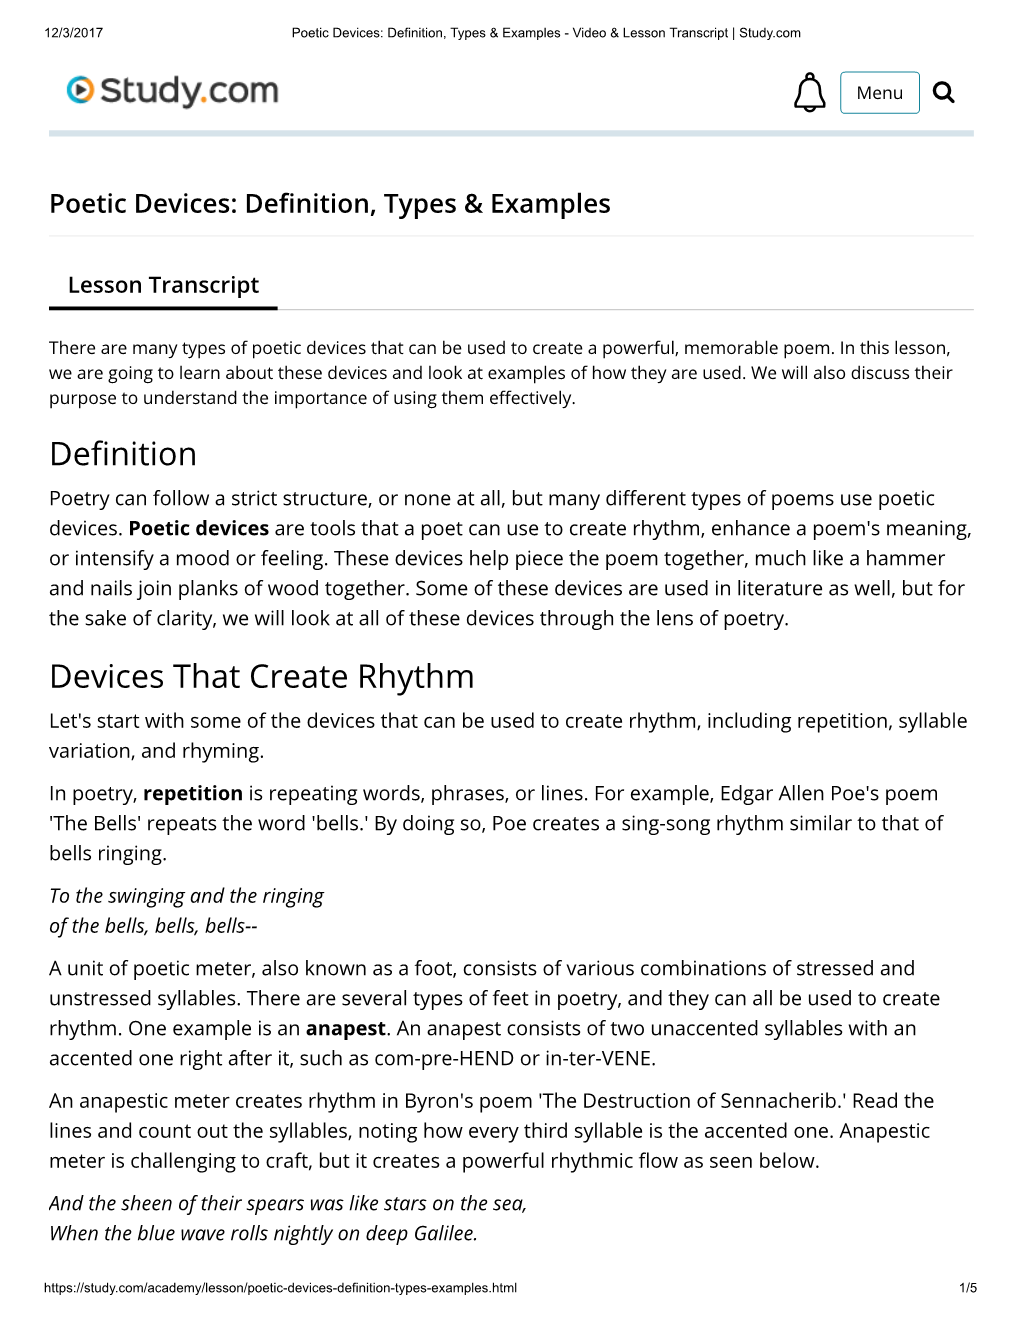 De Nition Devices That Create Rhythm